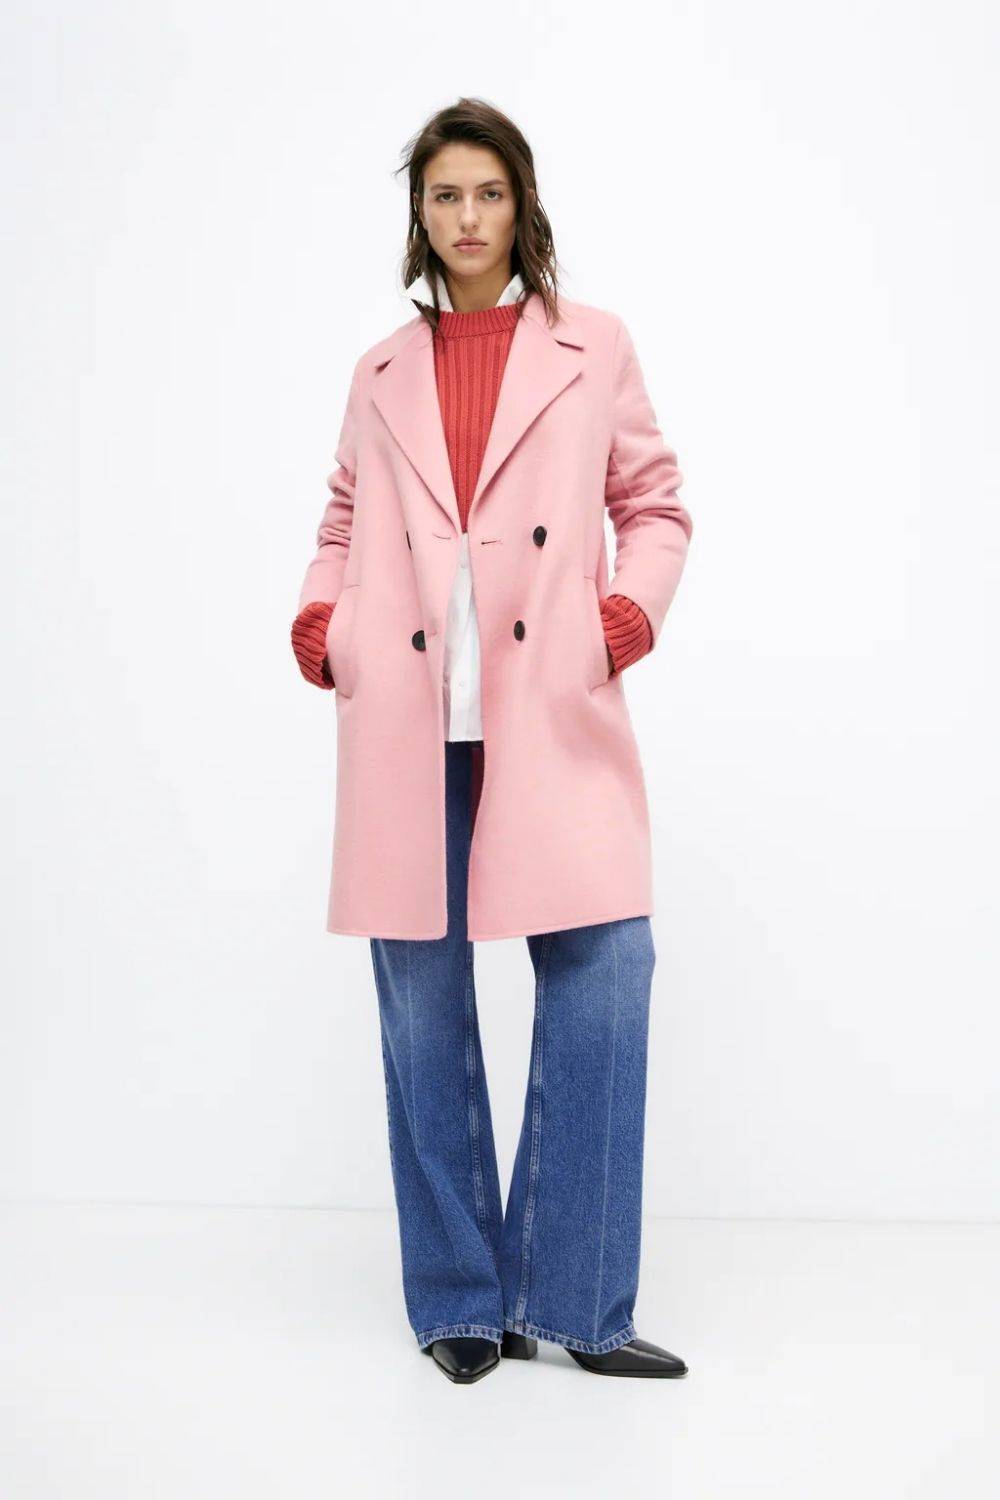 Abrigos de Zara 2022: en color rosa